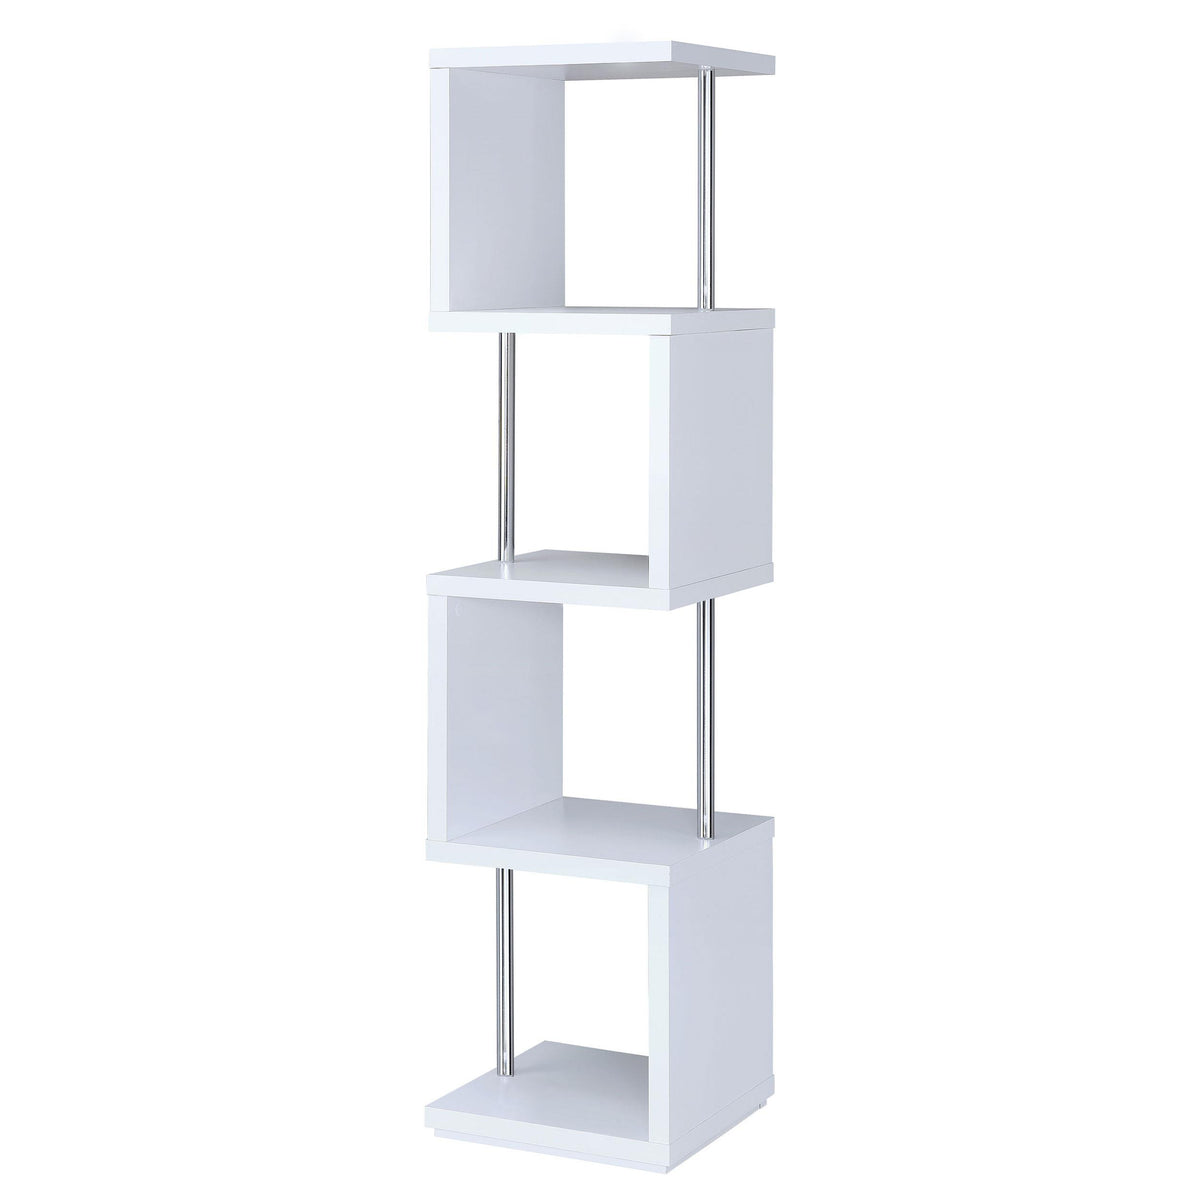 Baxter 4-shelf Bookcase White and Chrome  Las Vegas Furniture Stores